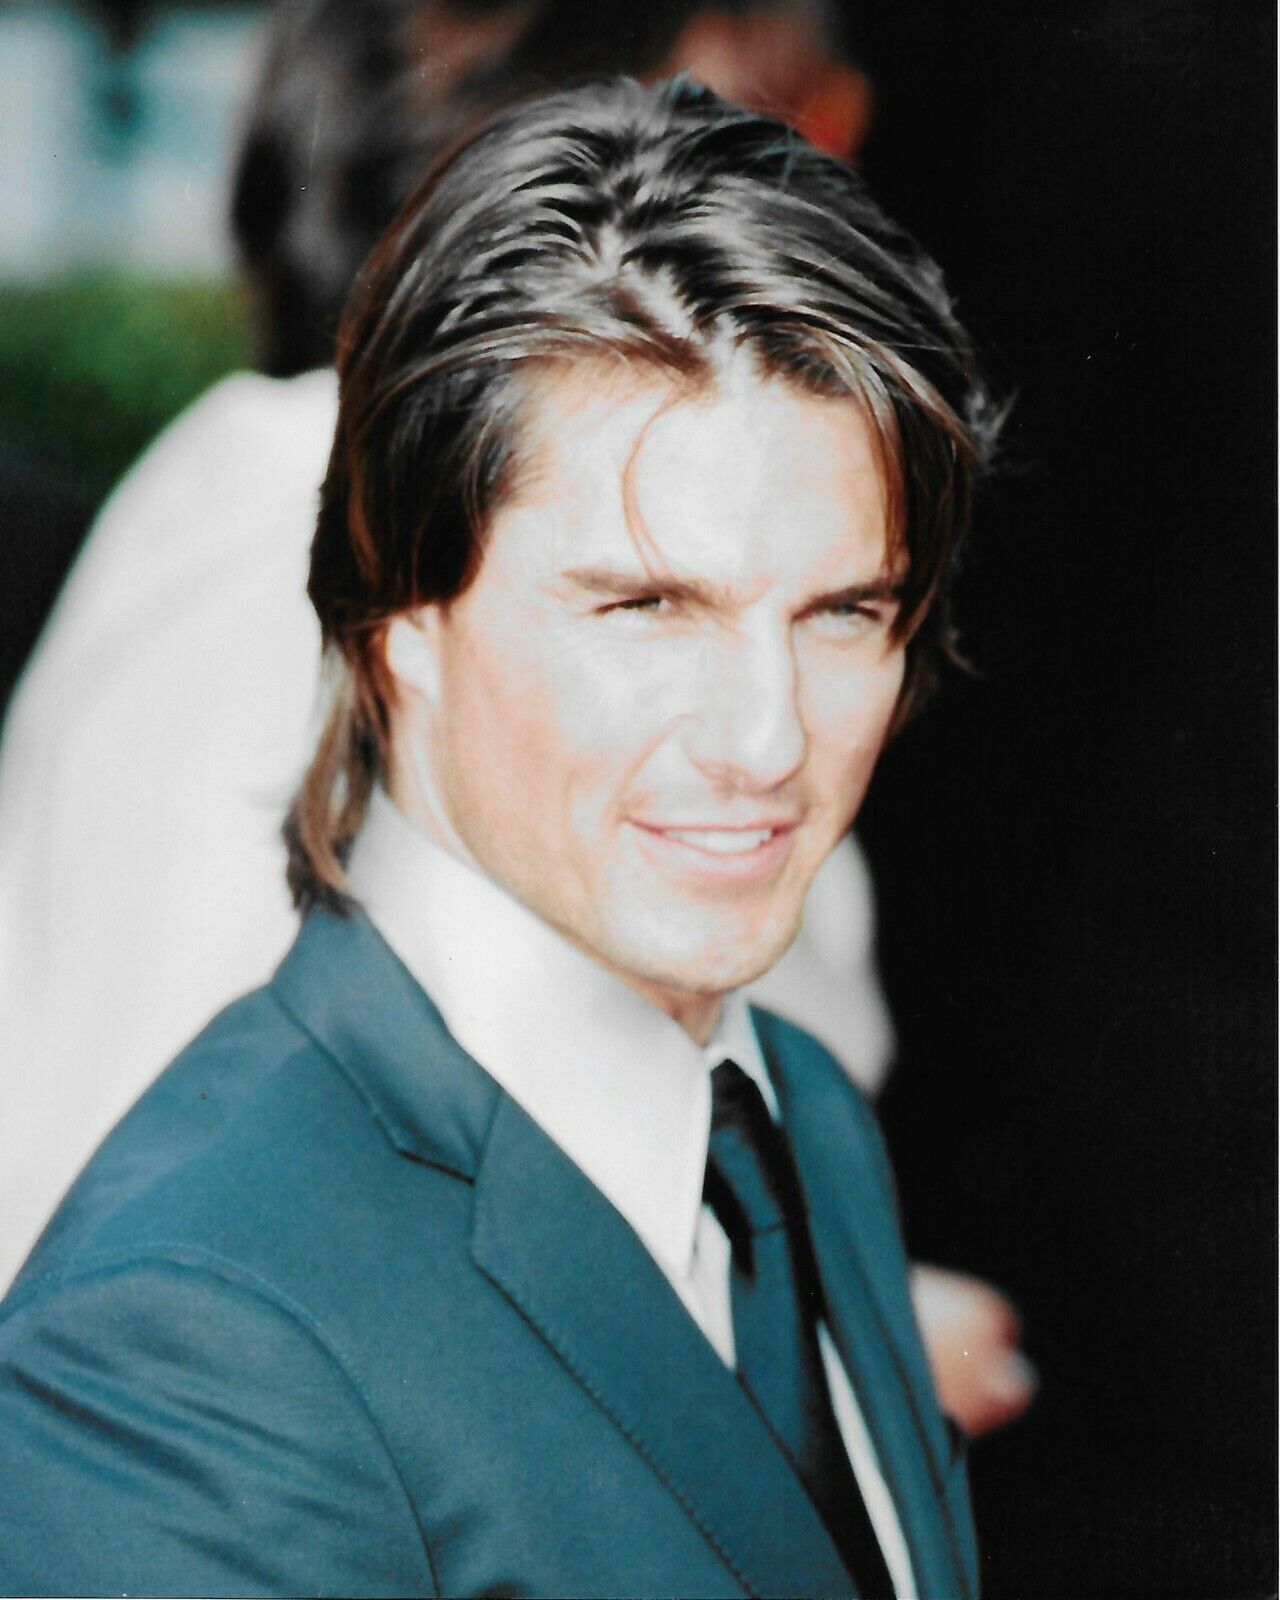 Amazing 8X10 Color Photo of Tom Cruise